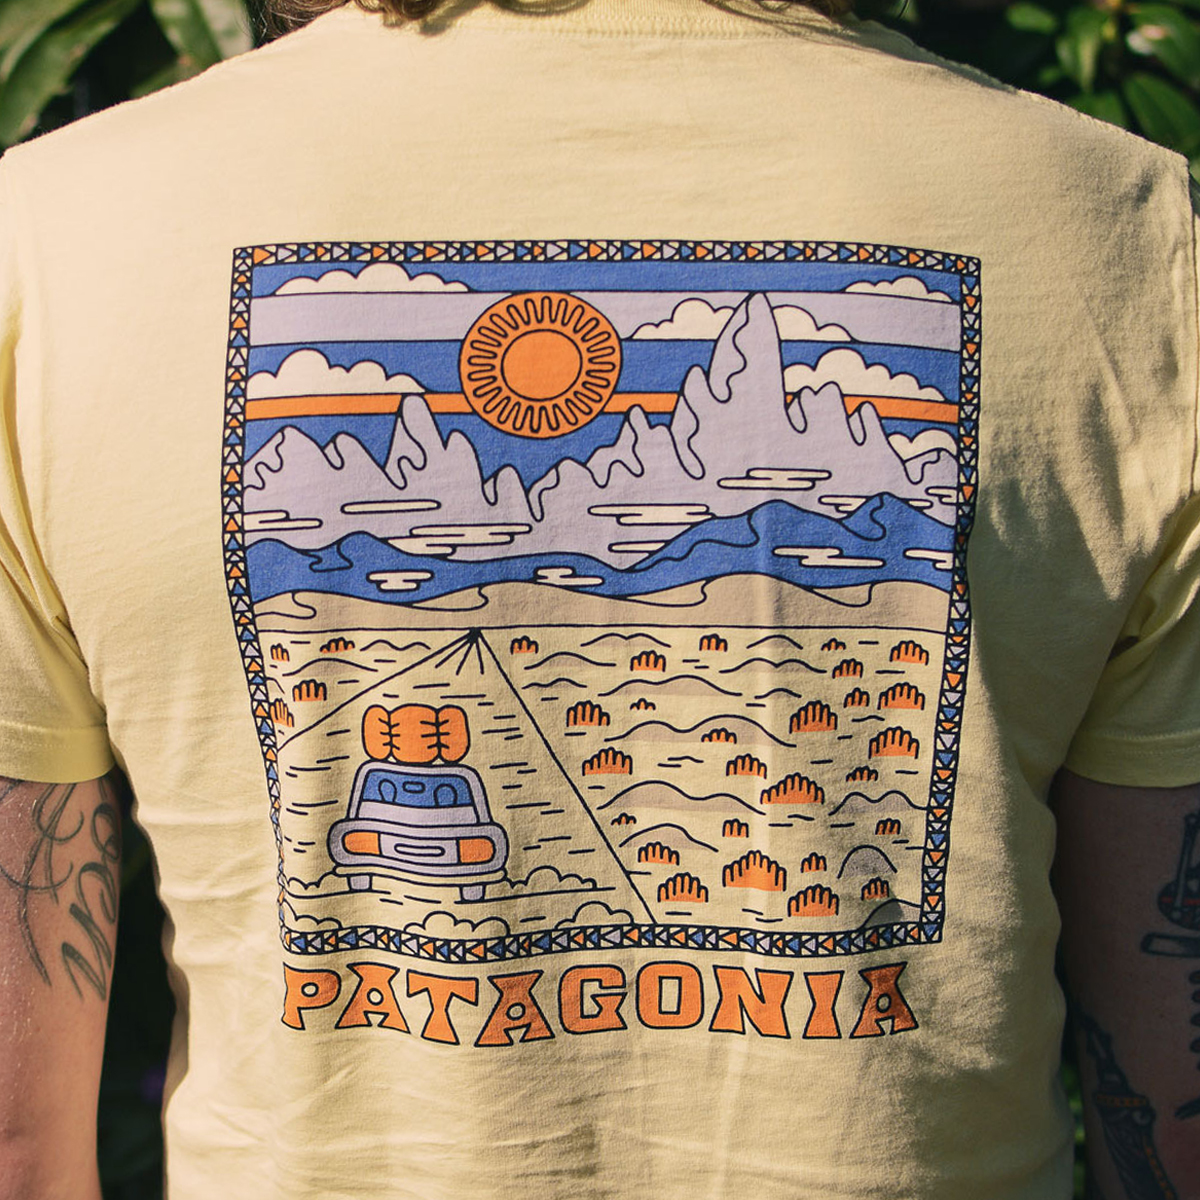 Patagonia shirt graphics